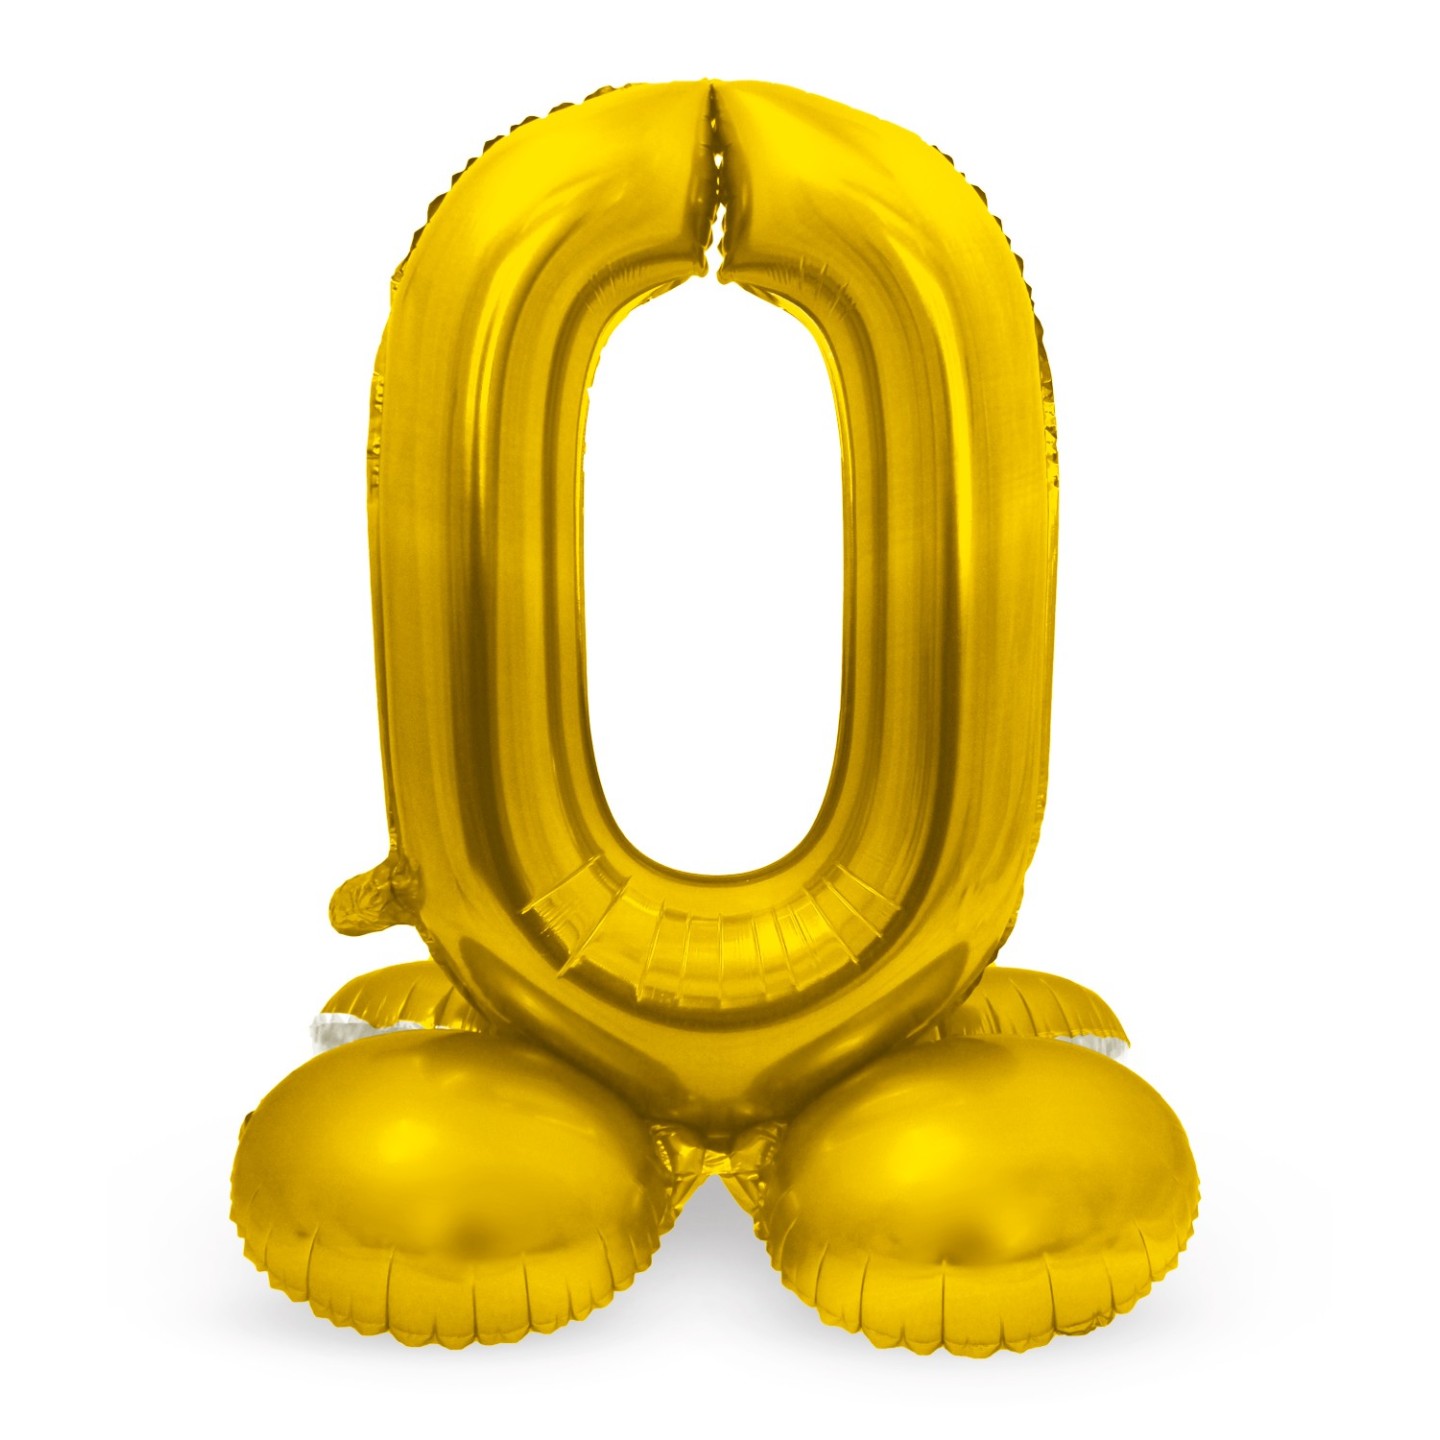 grote cijfer ballon 0 met basis goud folieballon